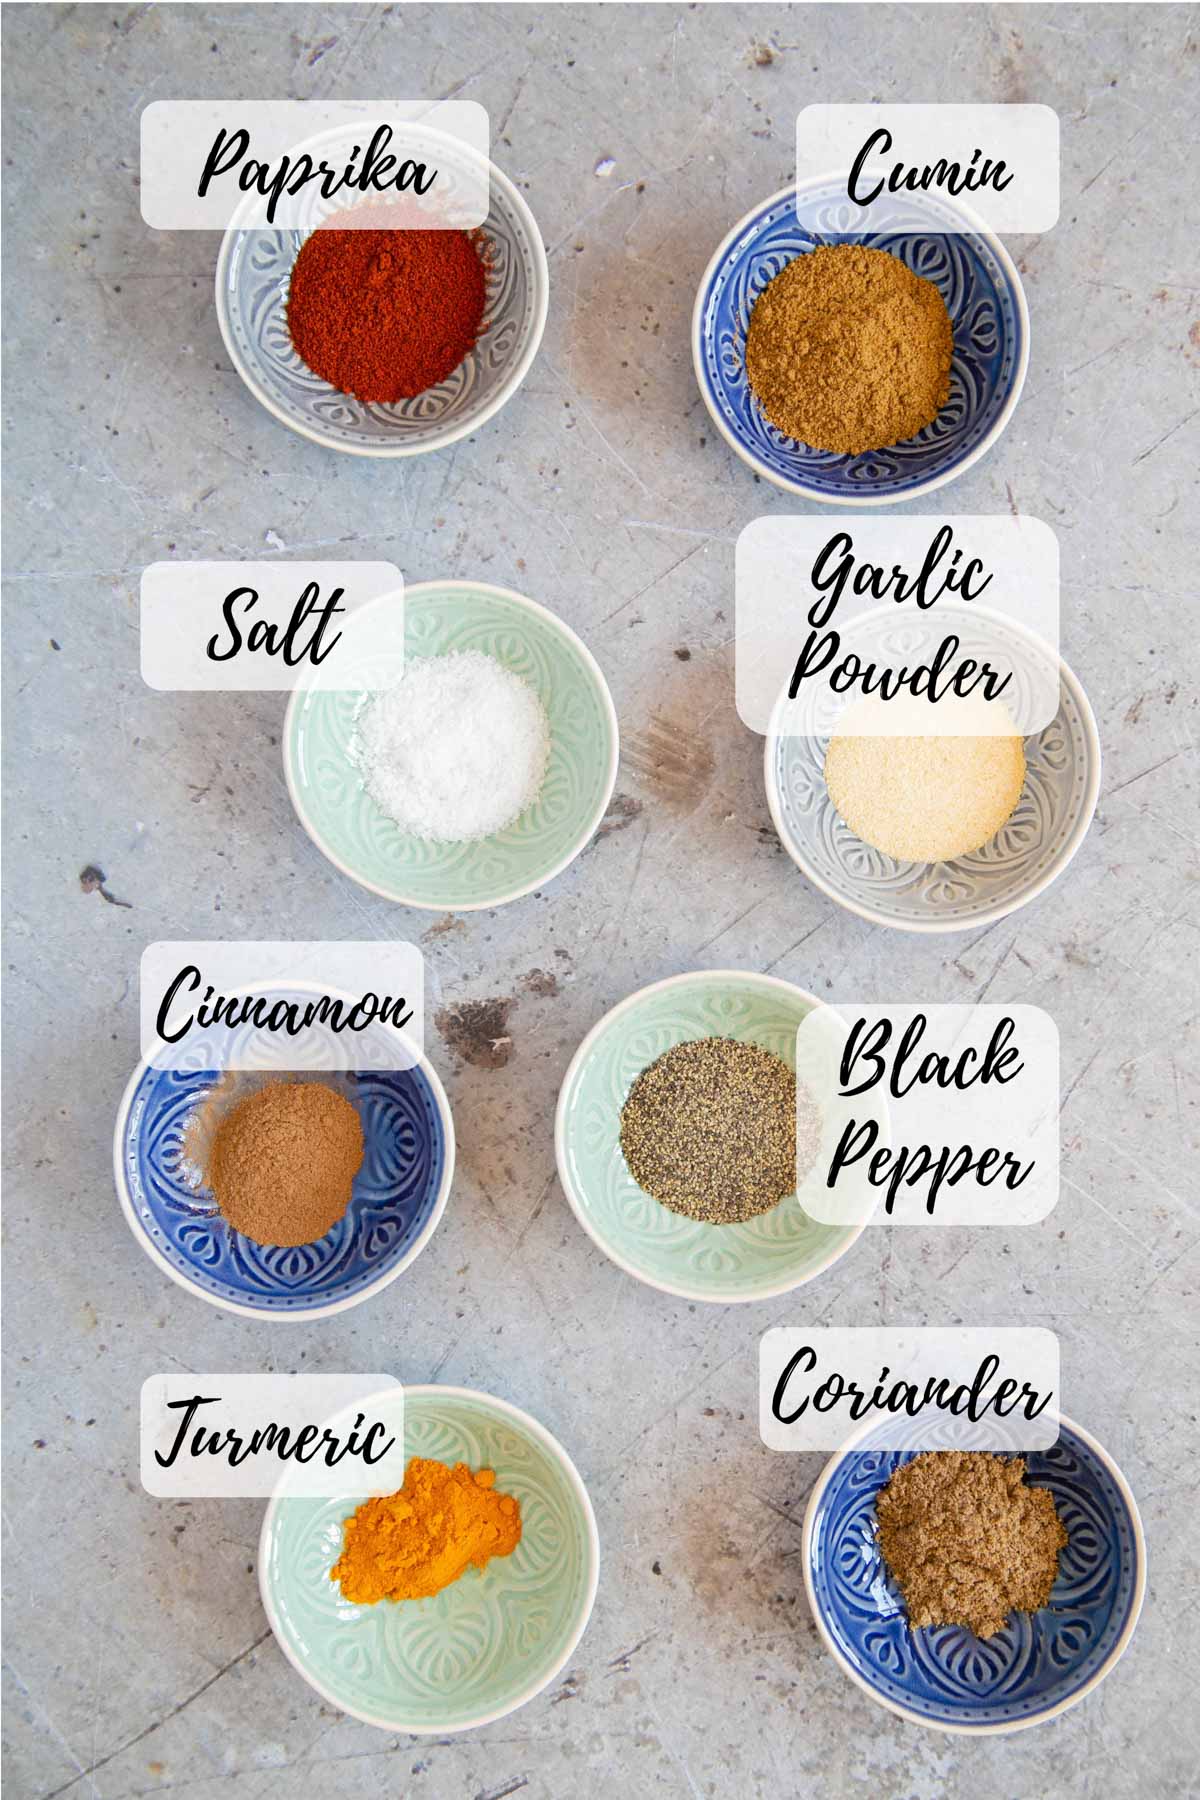 Ingredients for shish kebab spice blend: paprika, cumin, garlic powder, black pepper, coriander, turmeric, cinnamon, salt